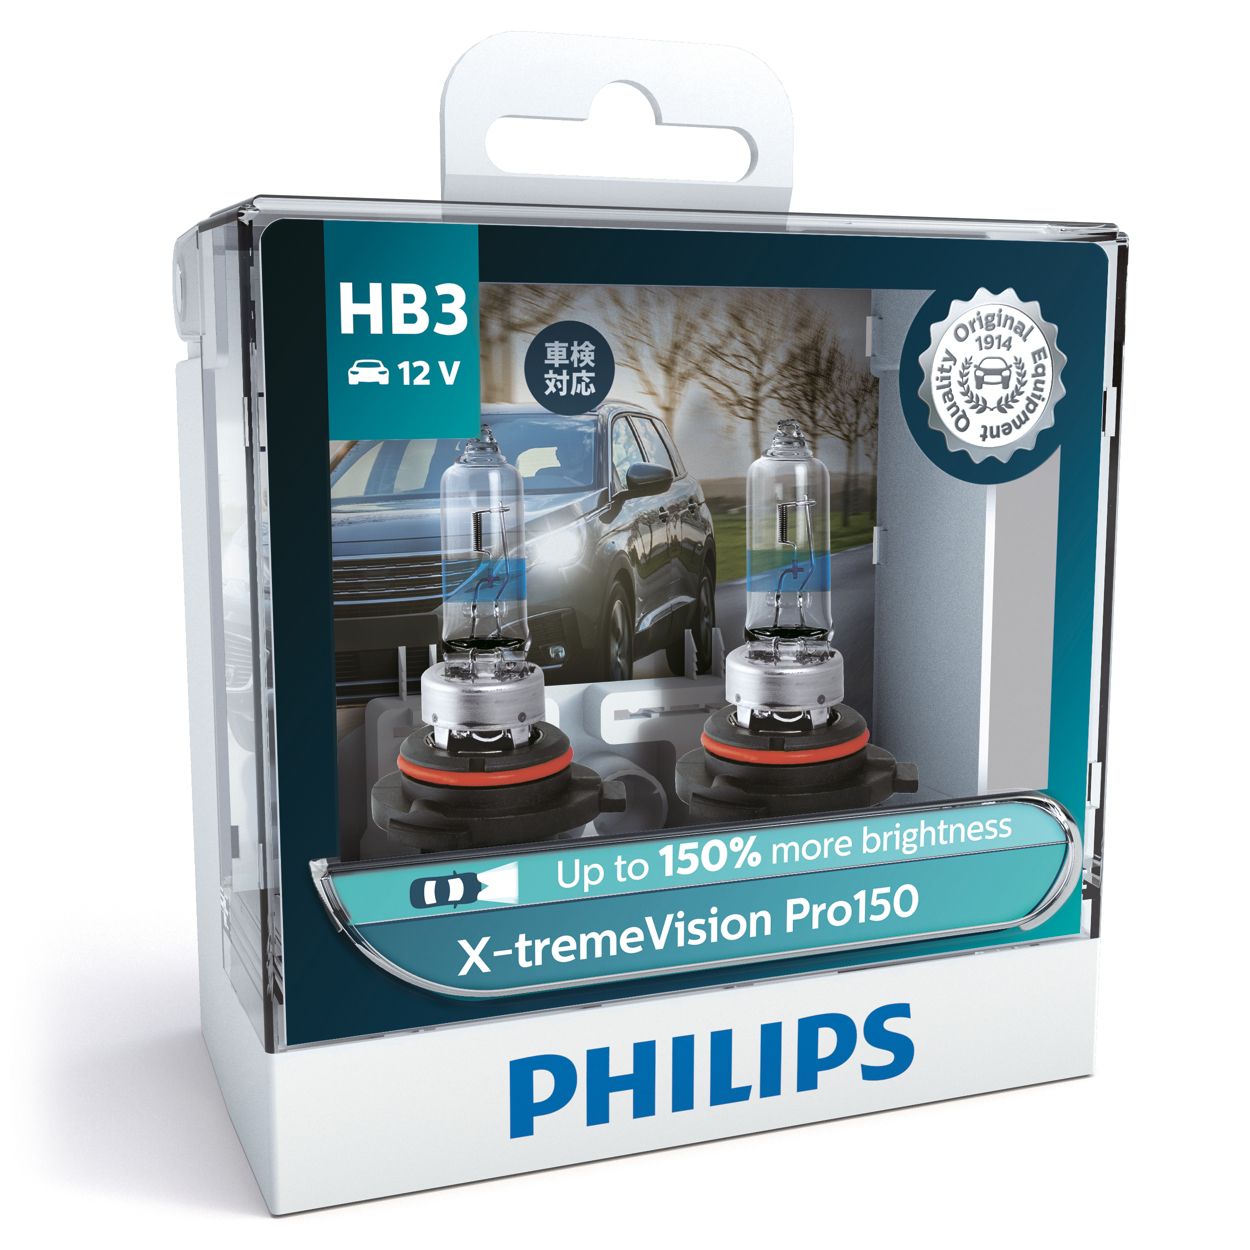 Philips H7 X-tremeVision Pro150 Headlight Halogen Bulbs | 12972XVPS2 | Pack  of 2